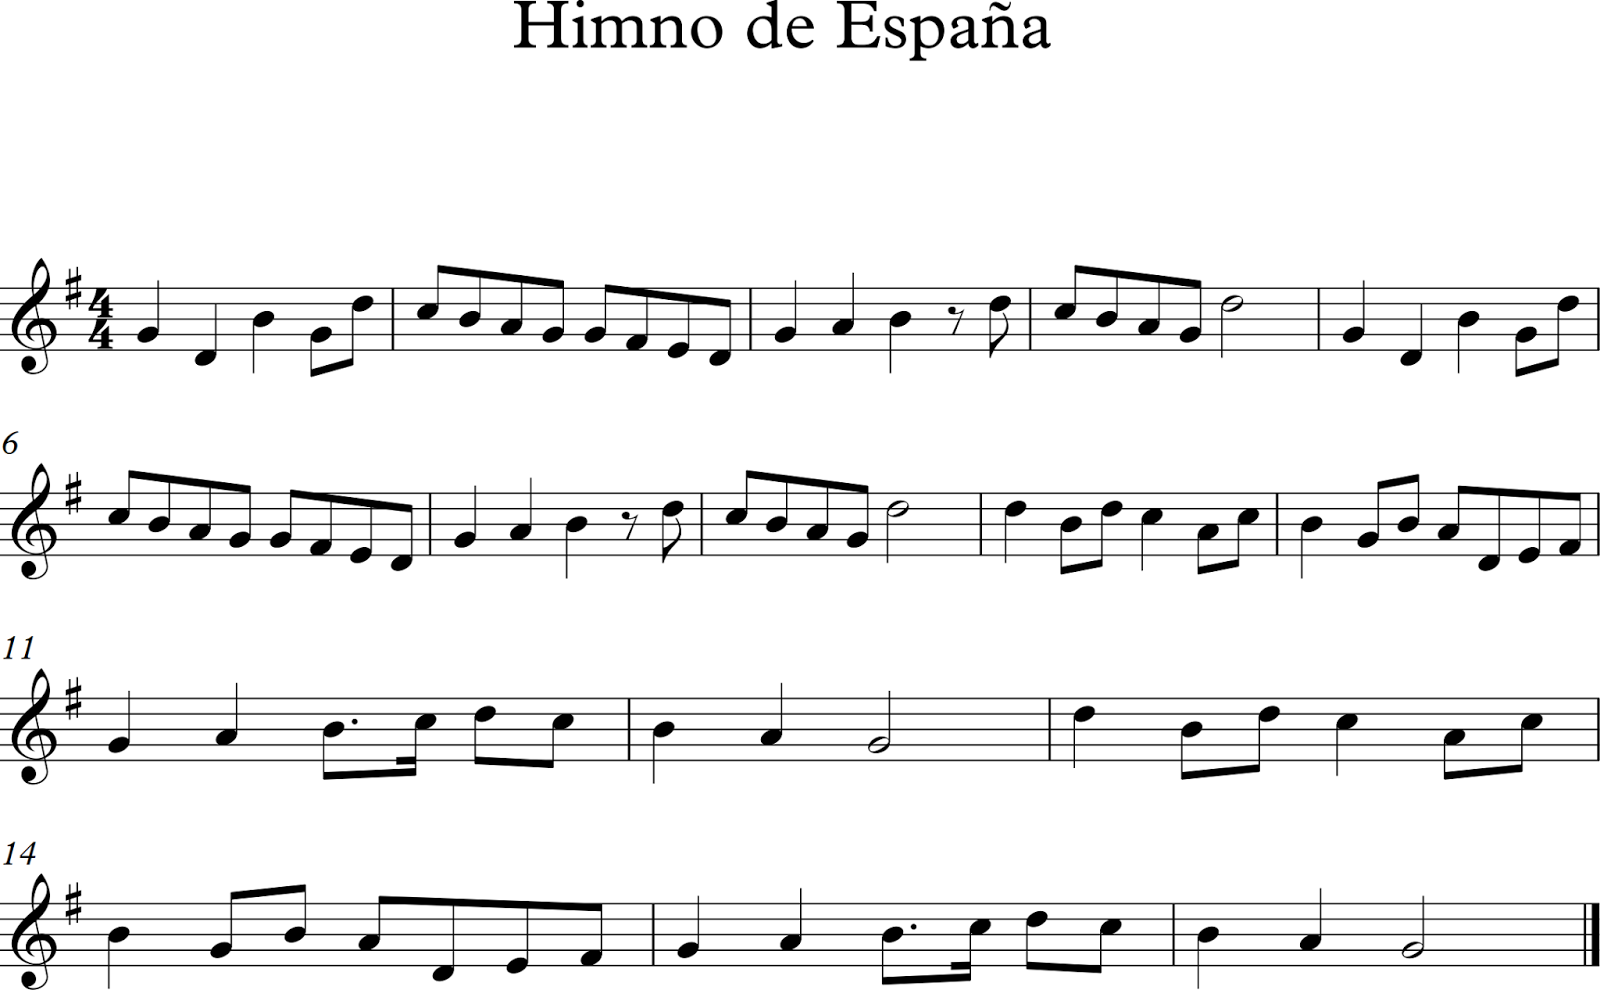 Partitura del Himno de España